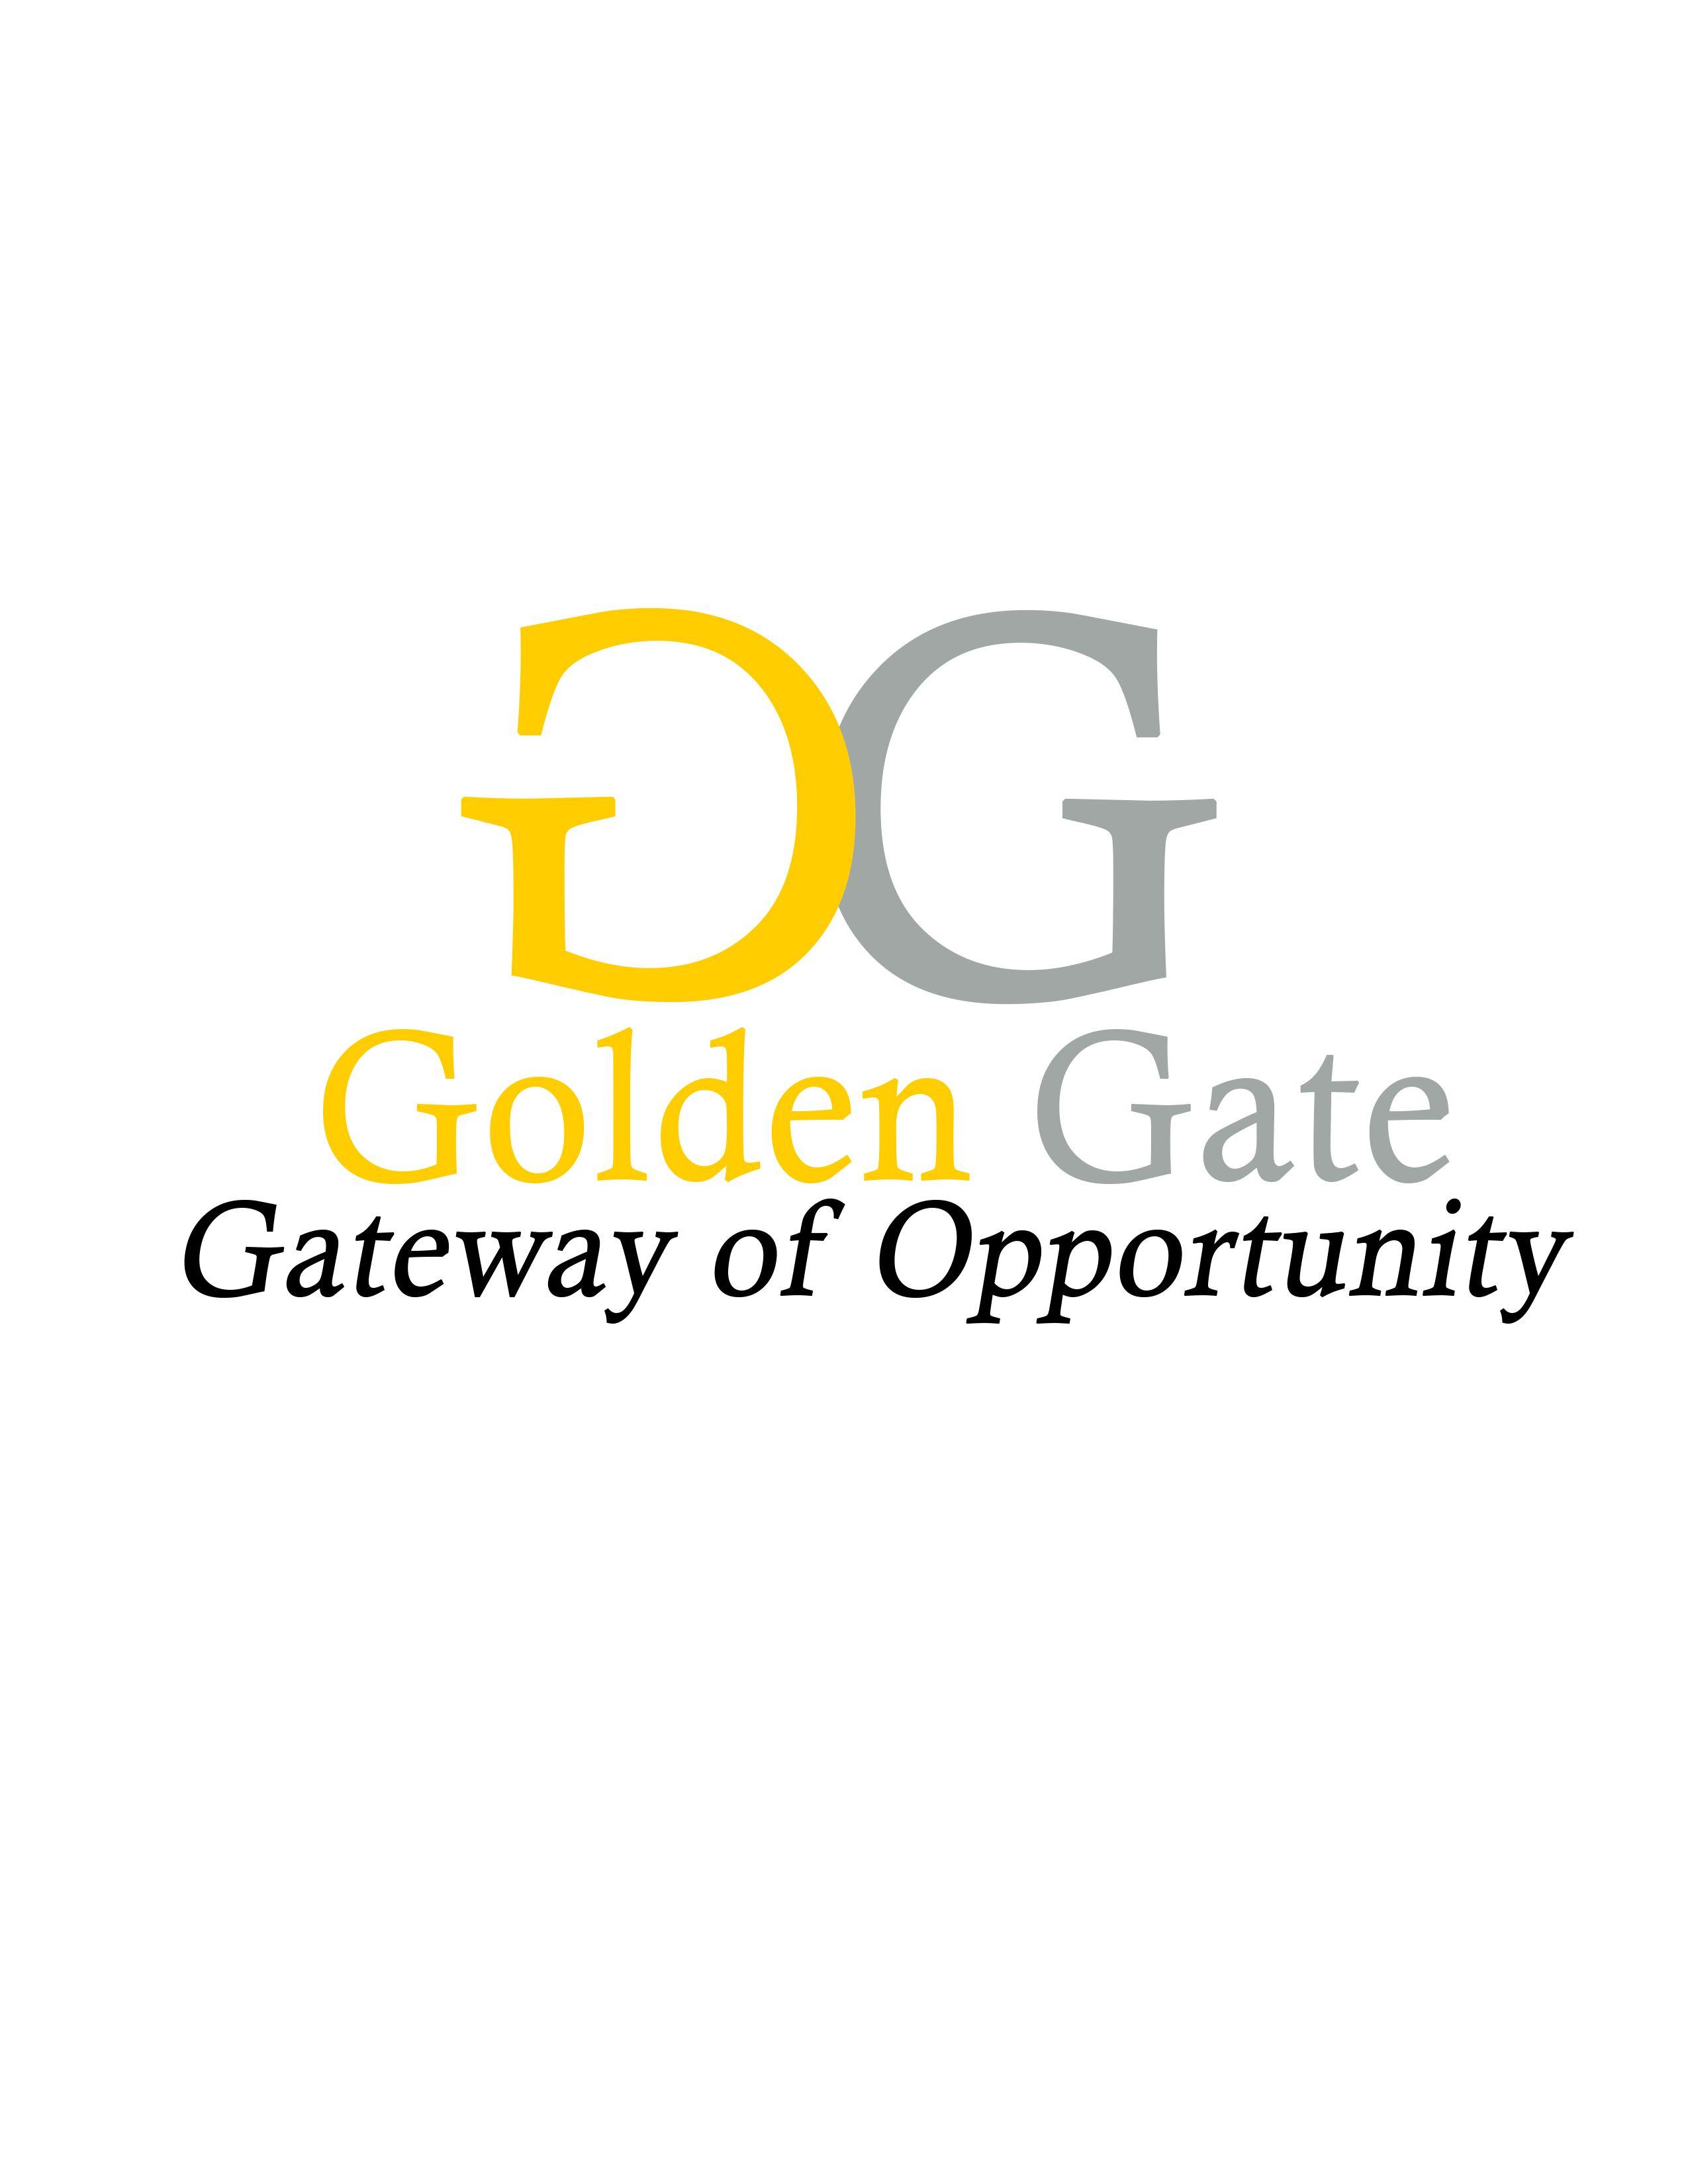 Golden Company Logo - Package For Deaf Education Company GOLDEN GATE